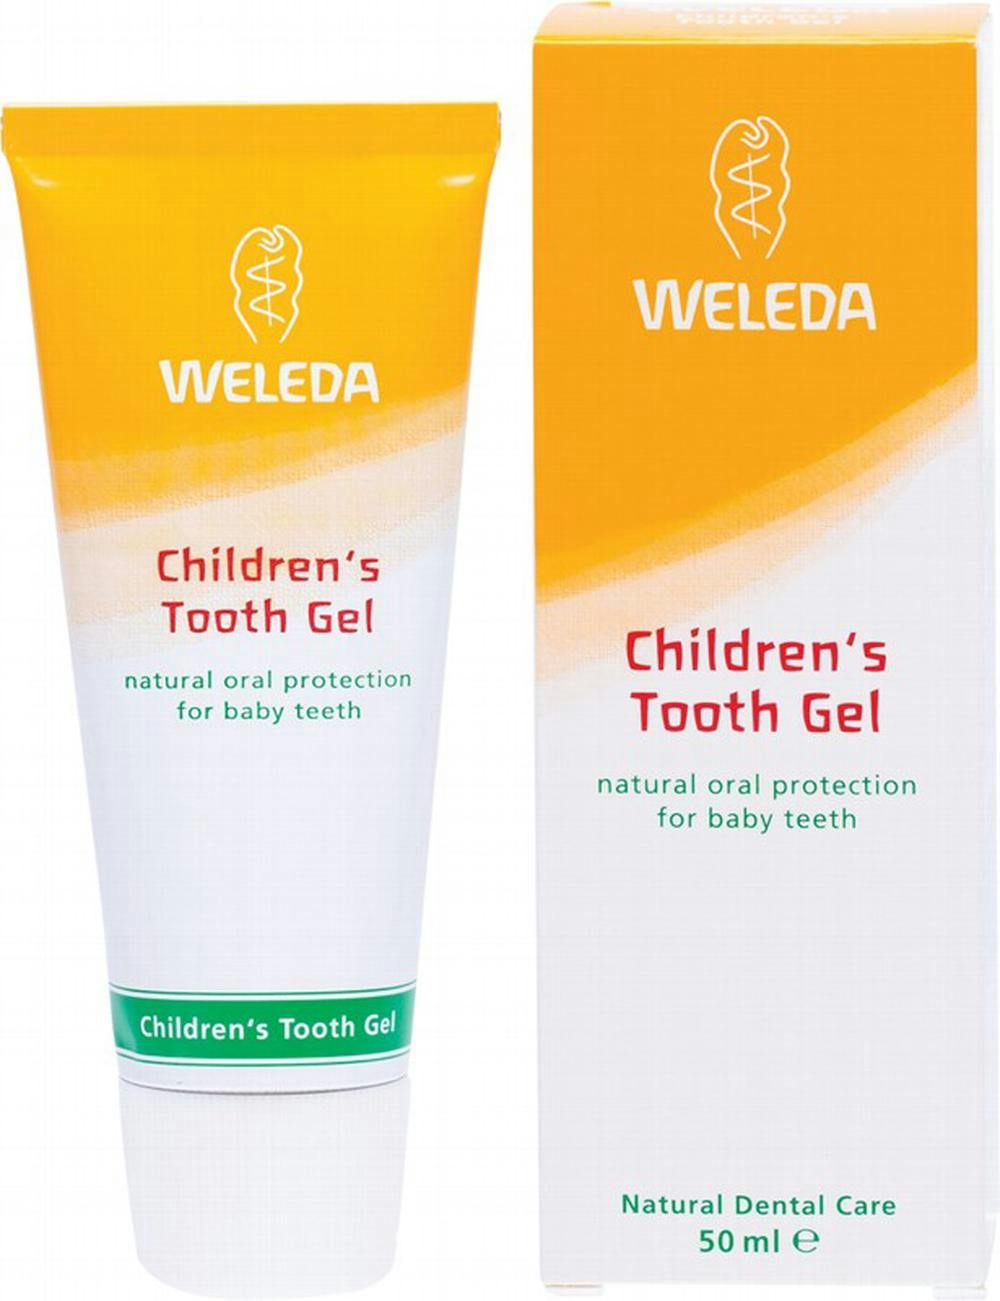 Weleda Tooth Gel Children's (for baby teeth) 50ml